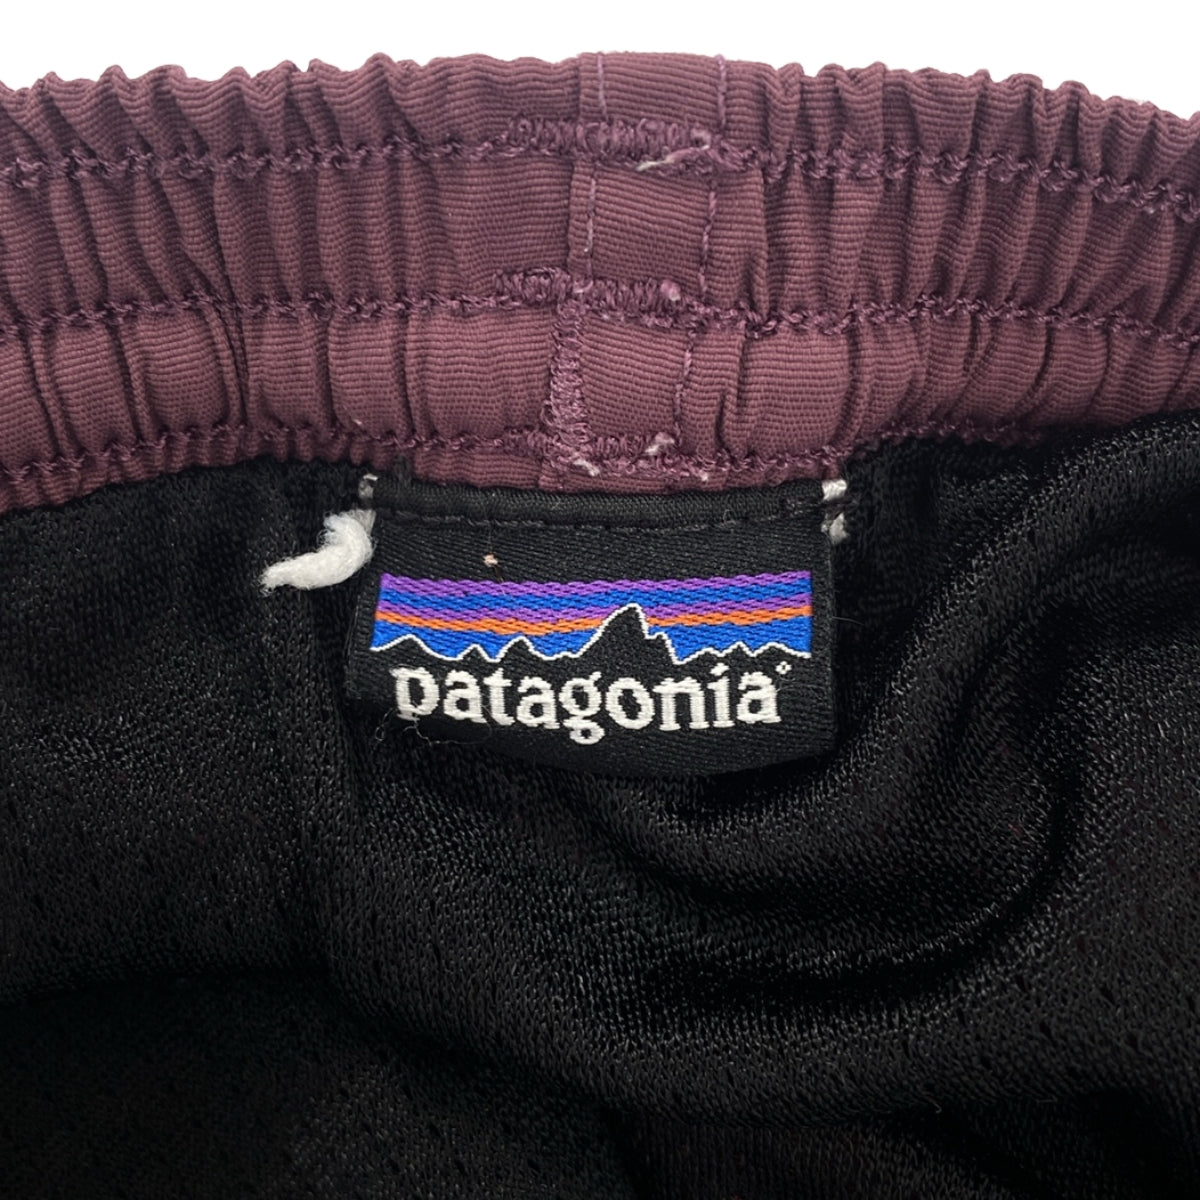 Patagonia / パタゴニア | Baggies Shorts / バギーズショーツ パンツ |